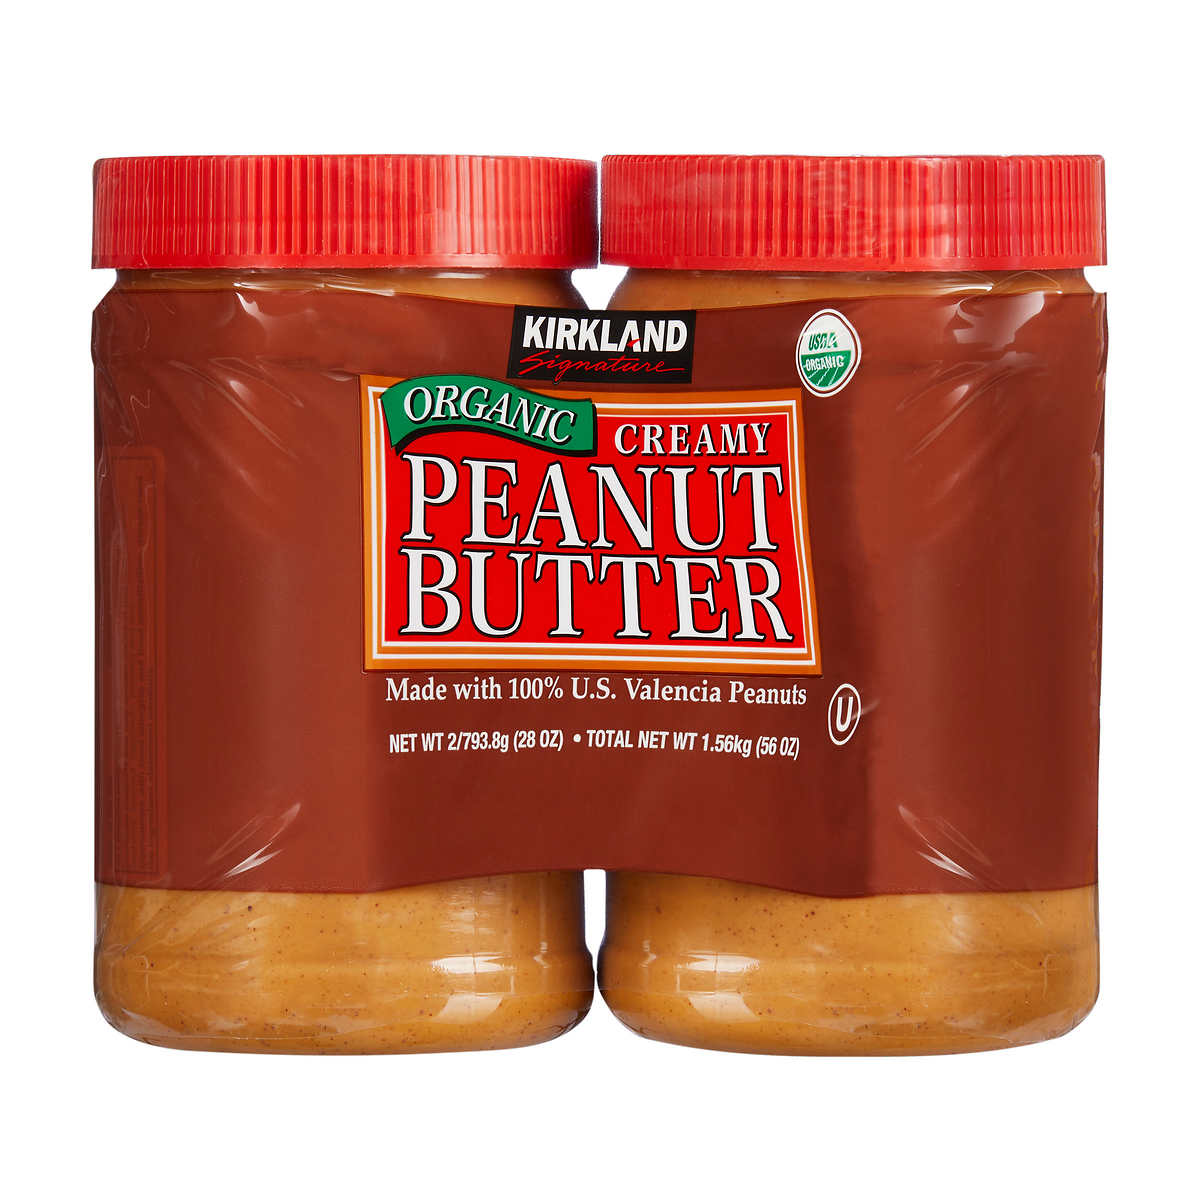 26 oz Value Size - Creamy Peanut Butter